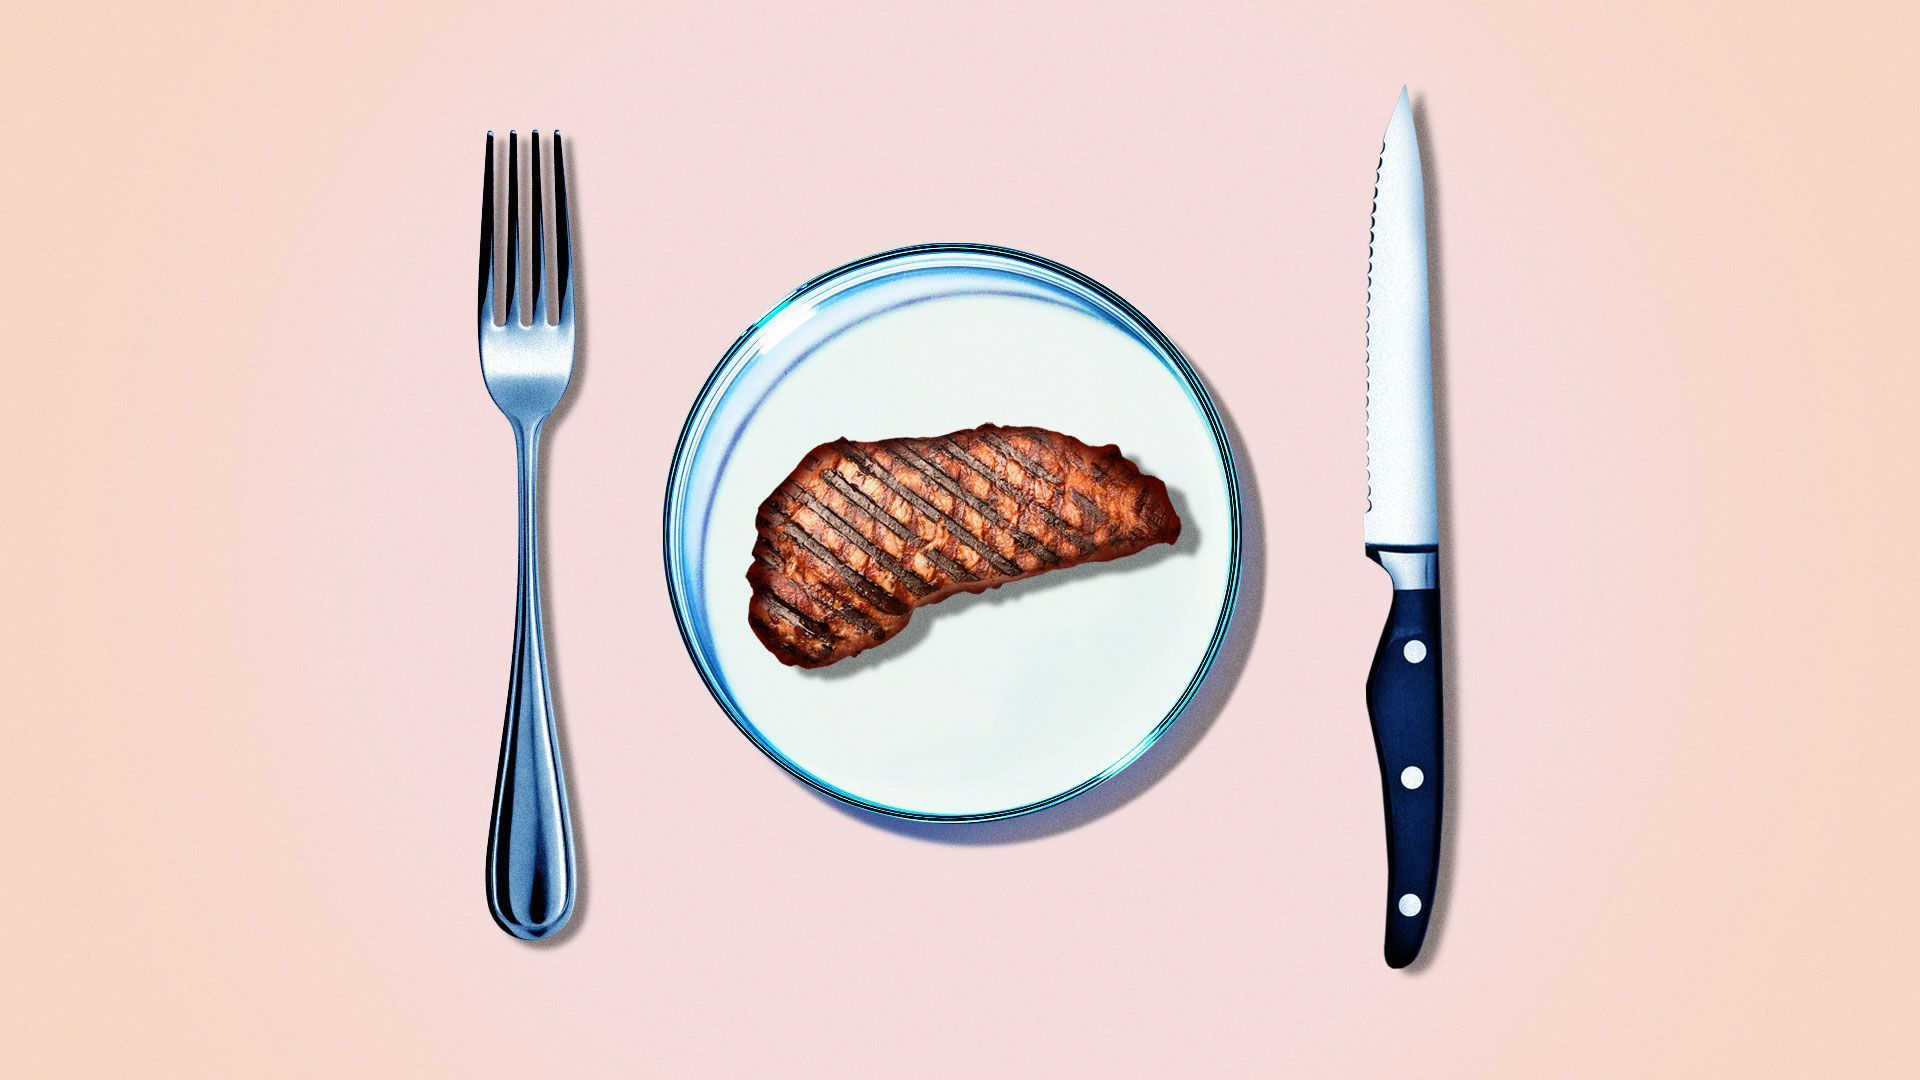 Illustration of alternative meat